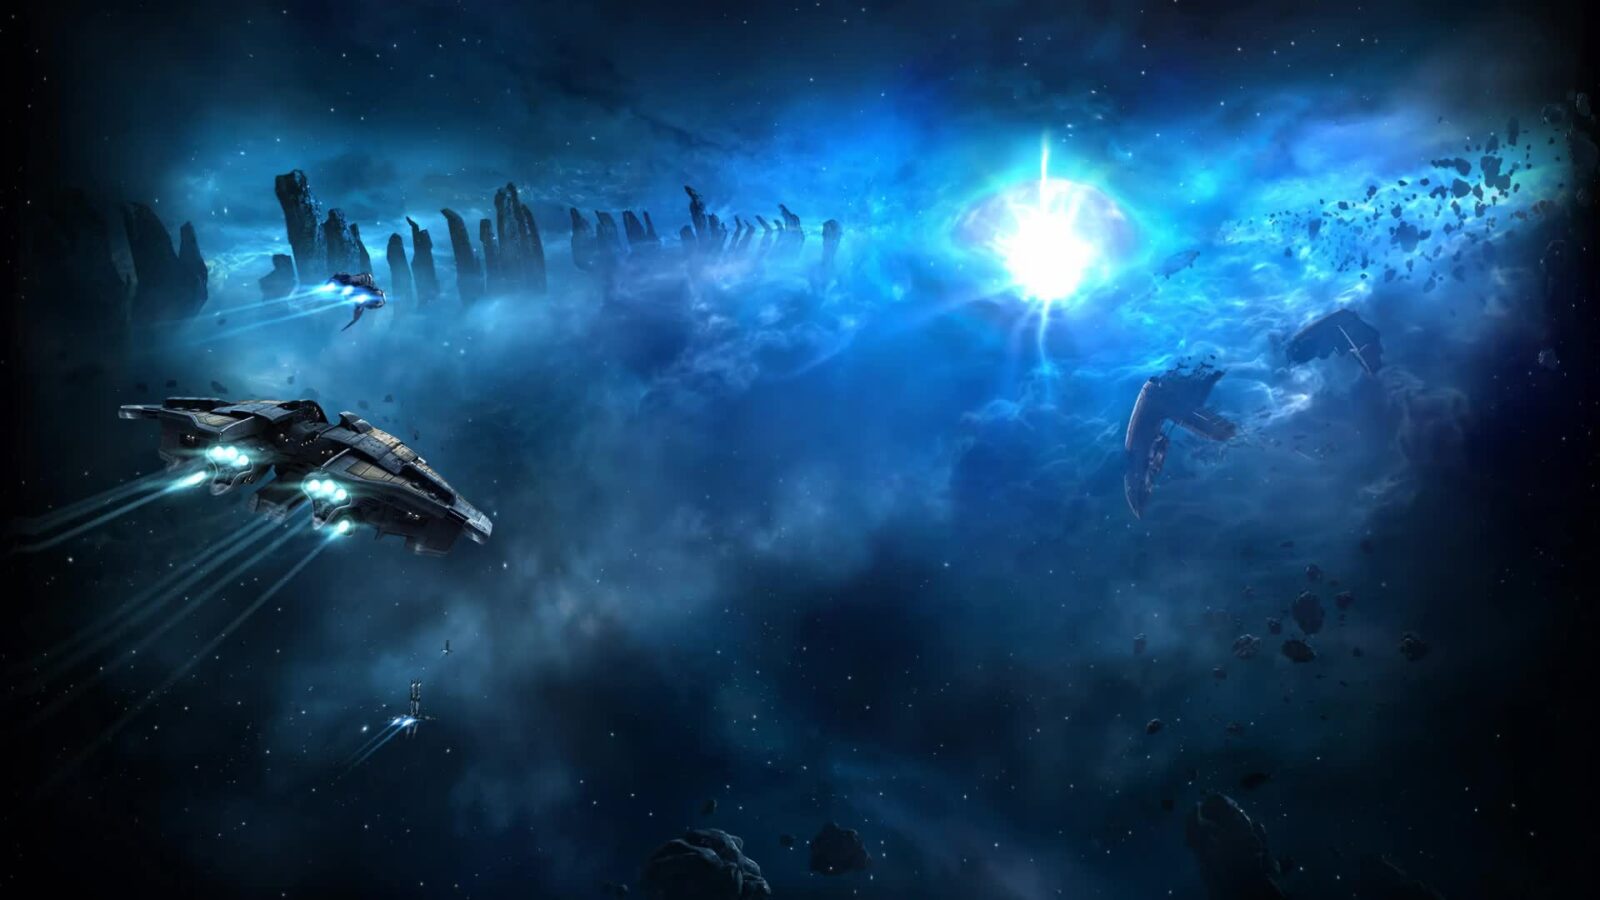 Fantasy Battle Spaceship Attack - Free Live Wallpaper - Live Desktop